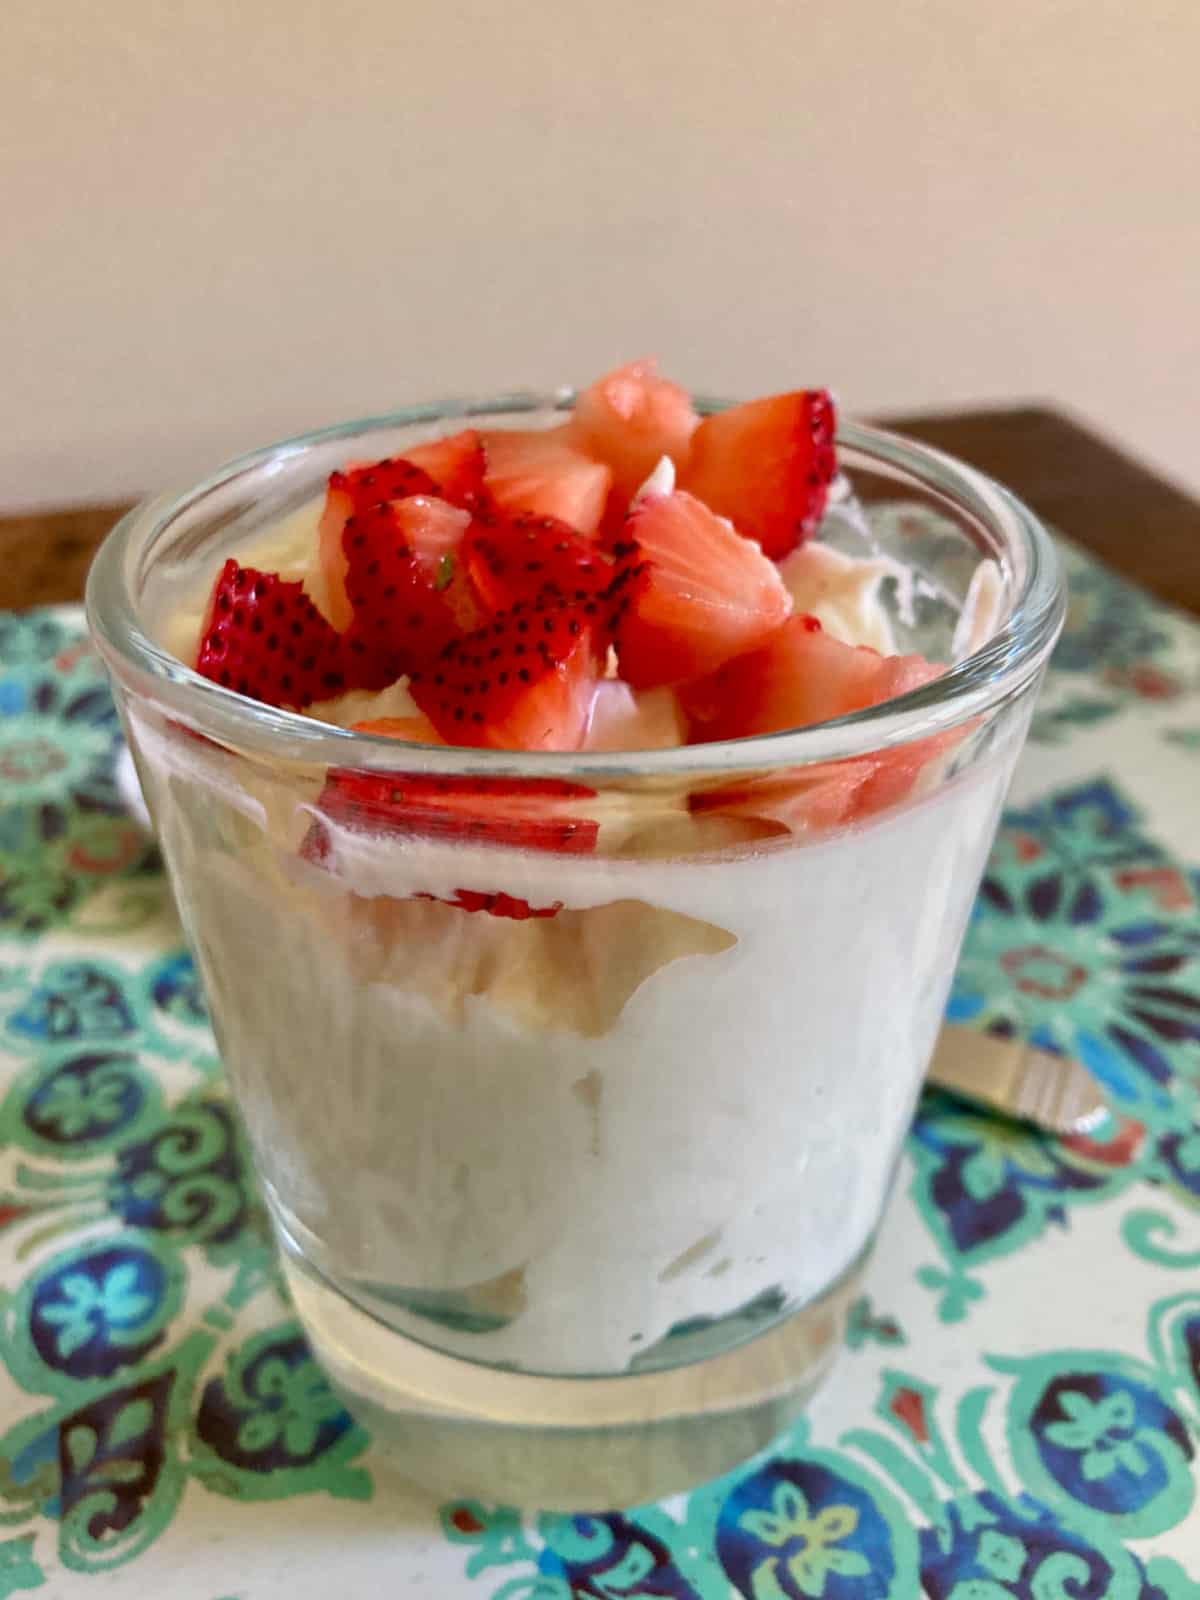 Vanilla yogurt fluff topped with fresh chopped strawberries in dessert glass.